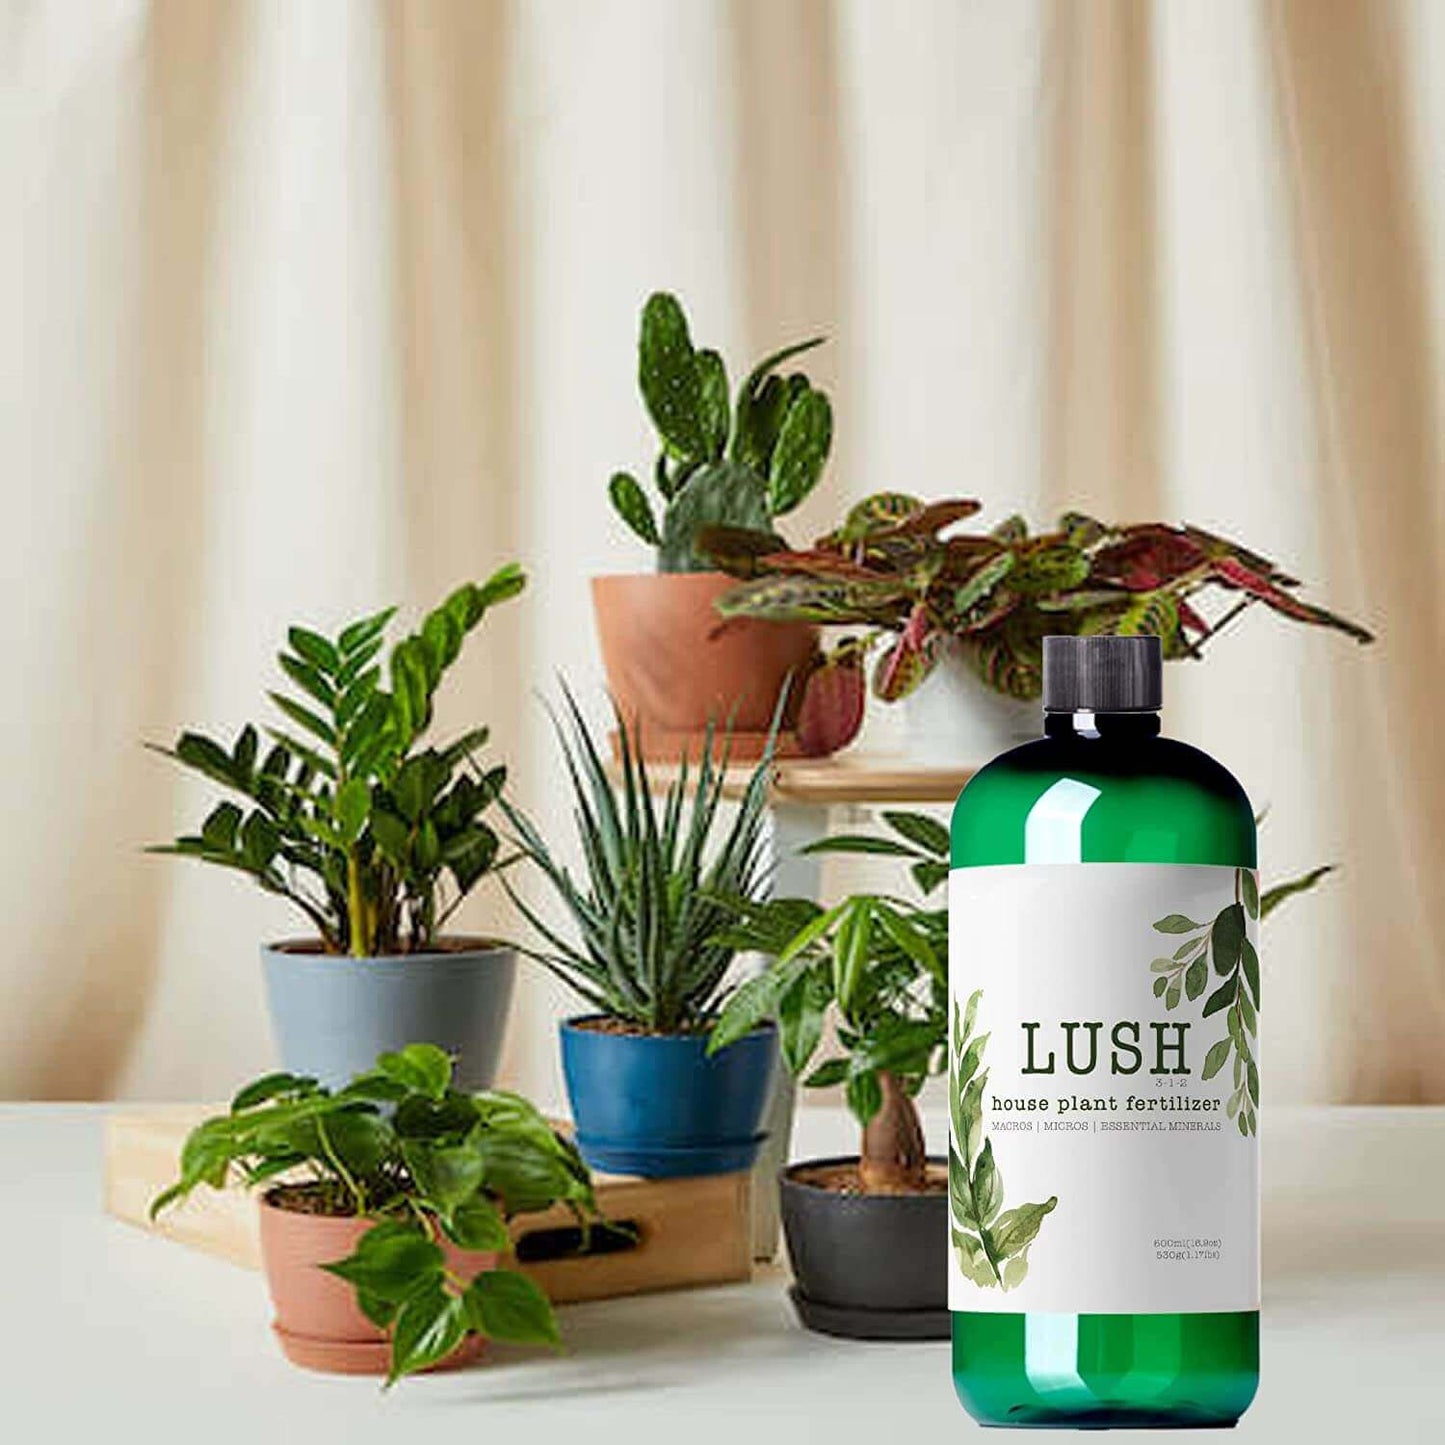 Lush Houseplant Fertilizer NilocG Aquatics